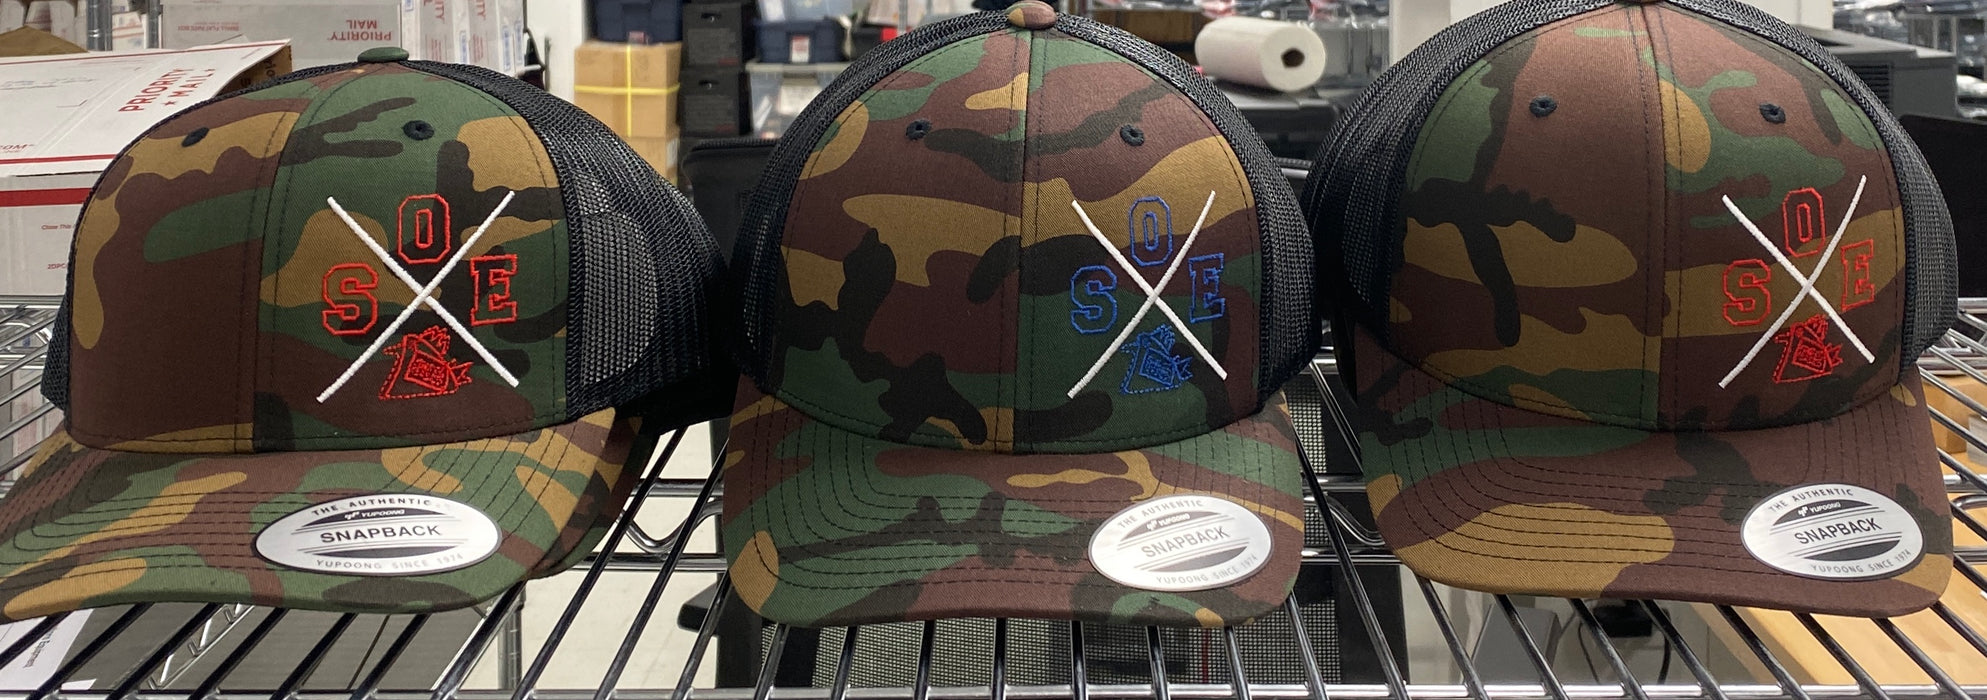 SOE X Woodland SNAPBACK Hats